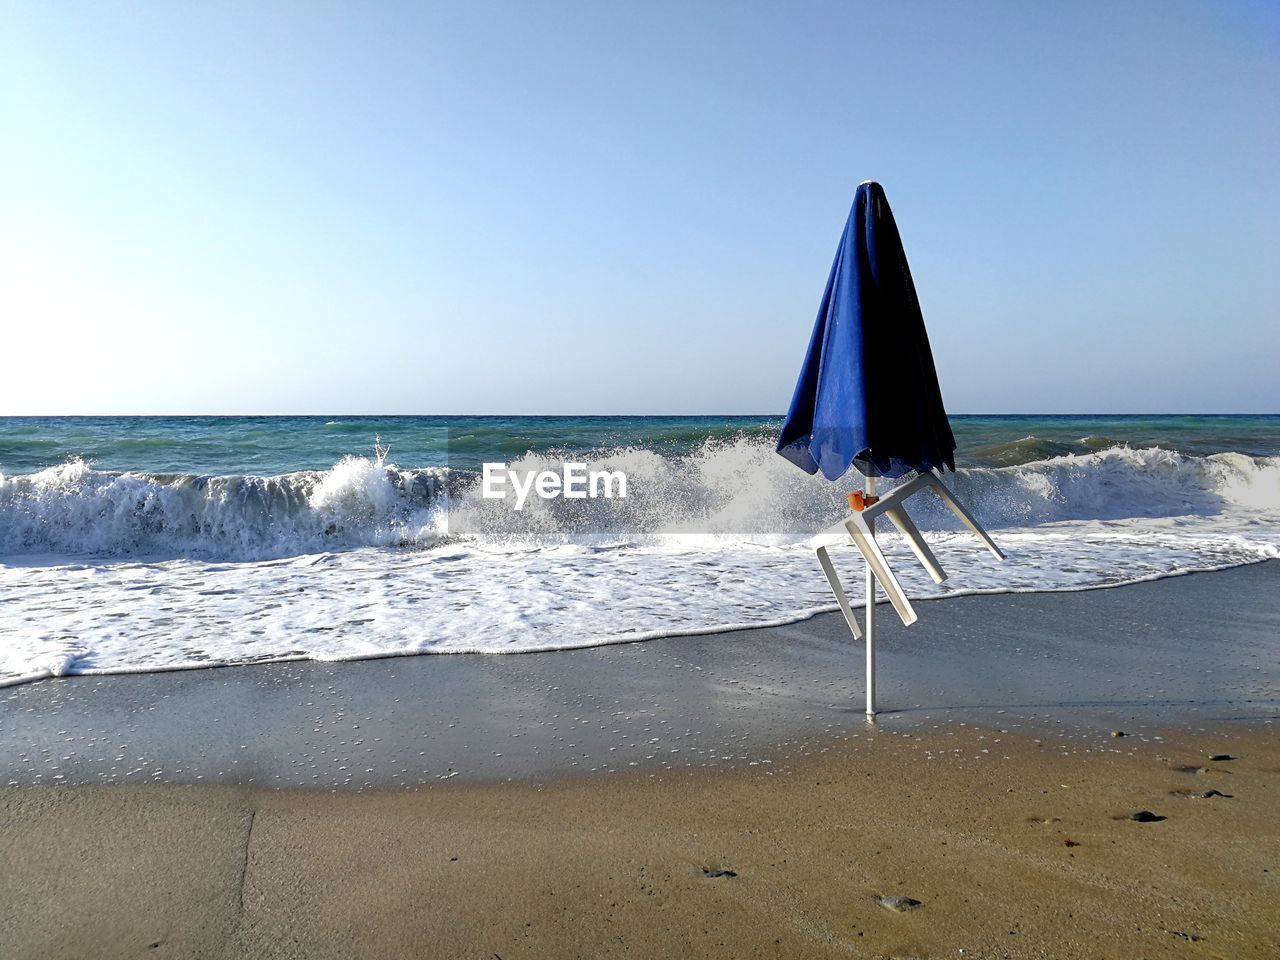 Windy beach with abandoned umbrella